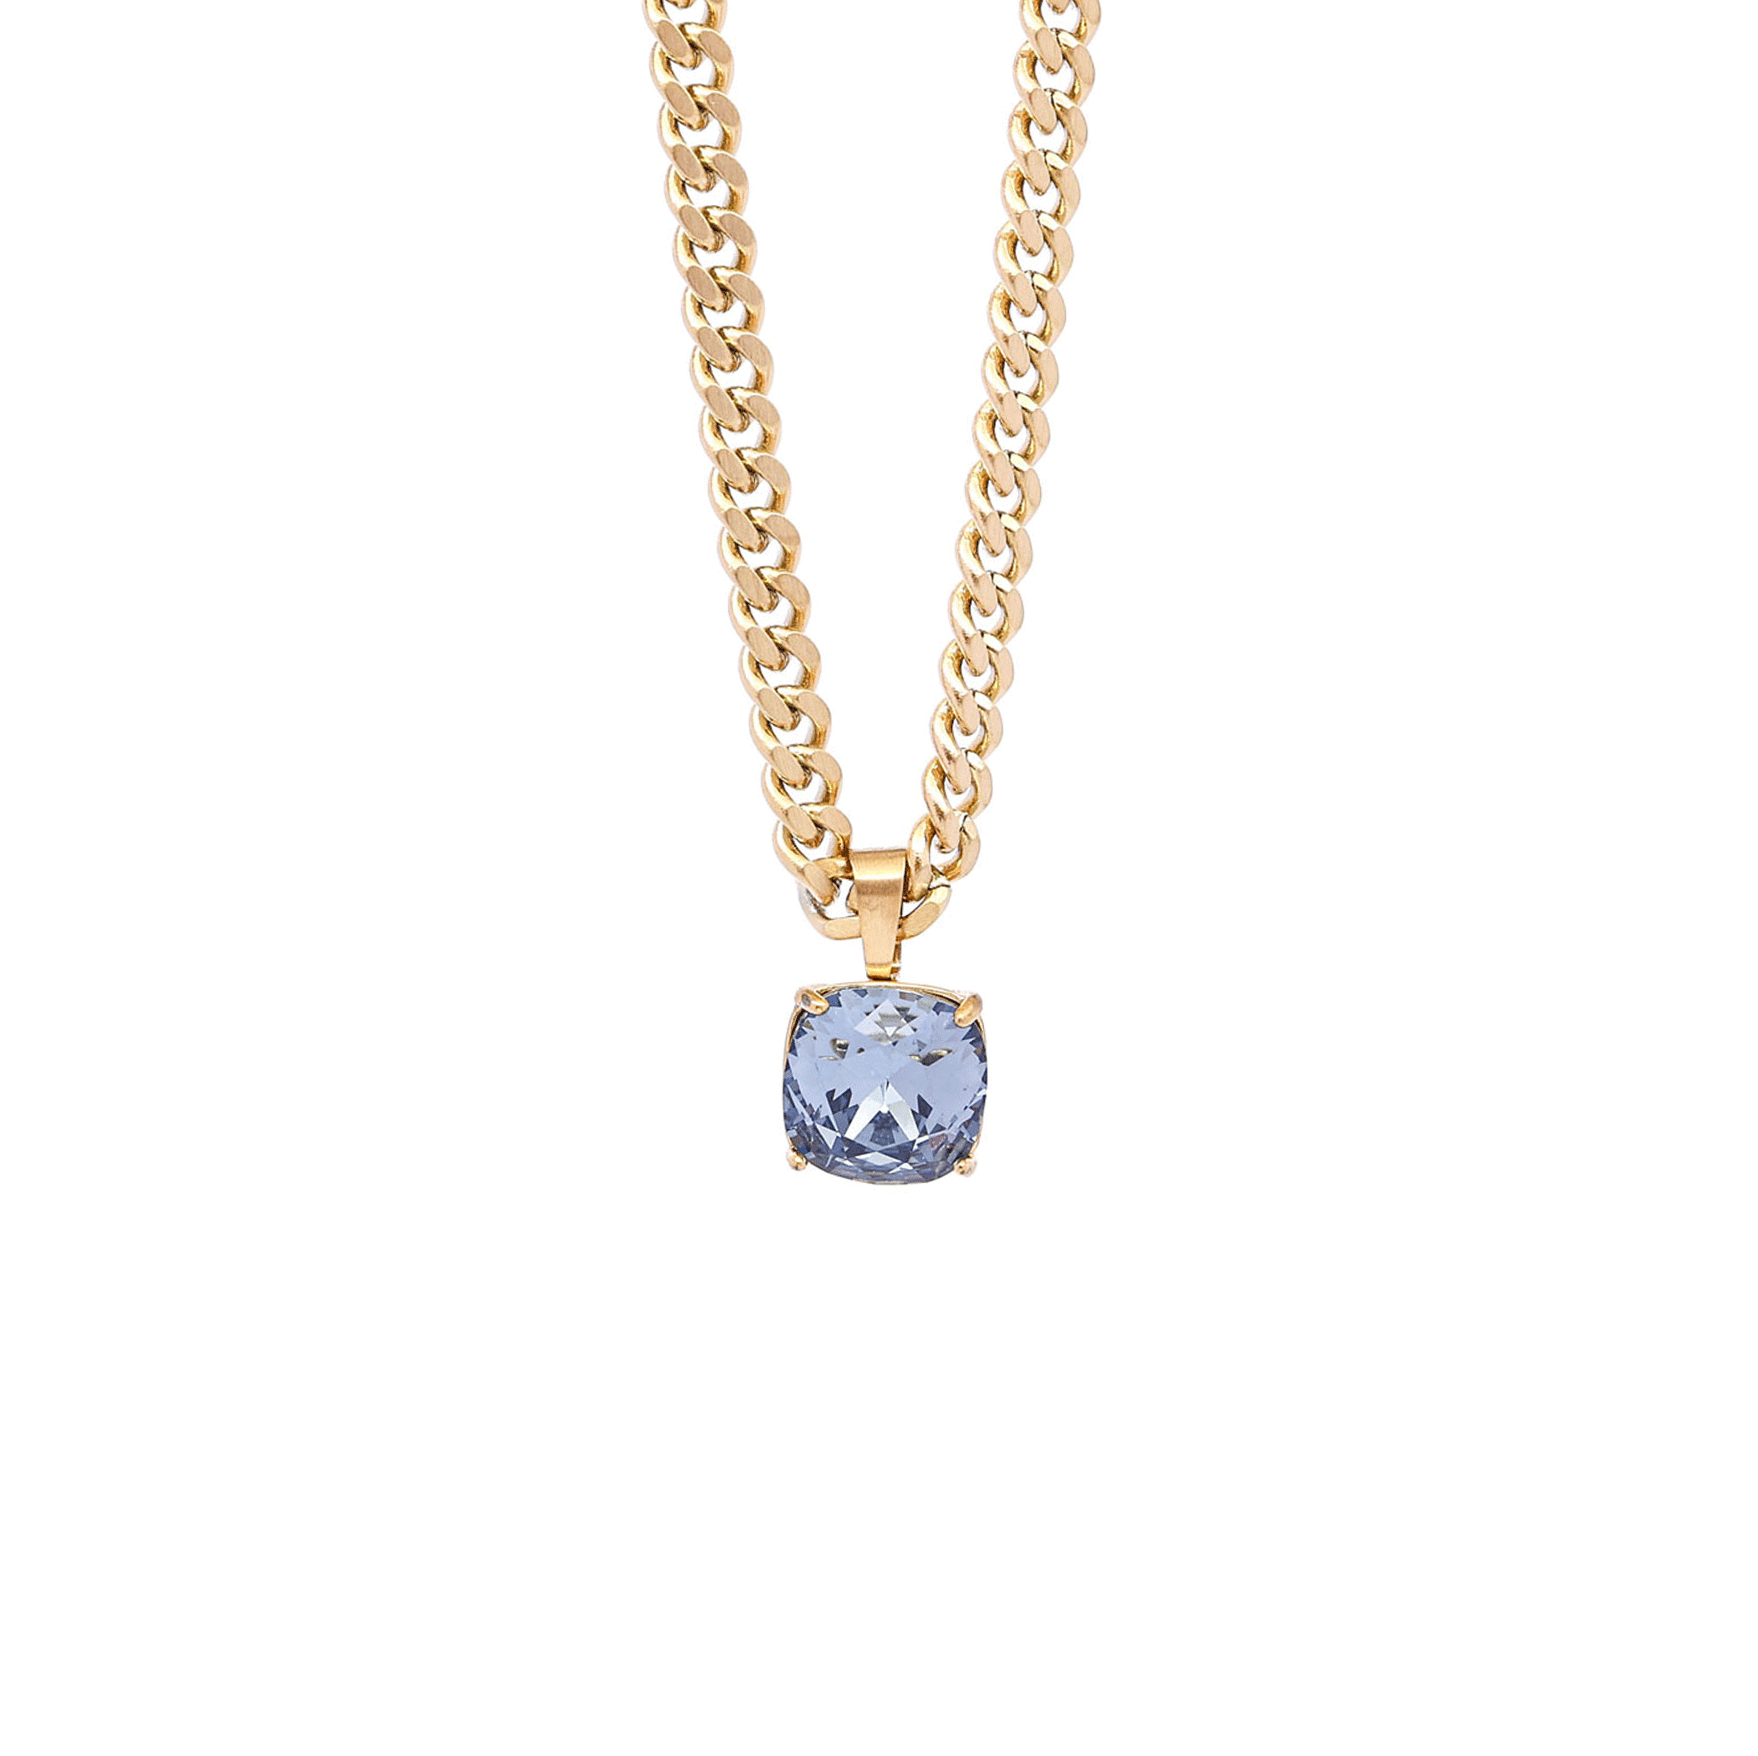 Carla Swarovski chain necklace - Denim blue